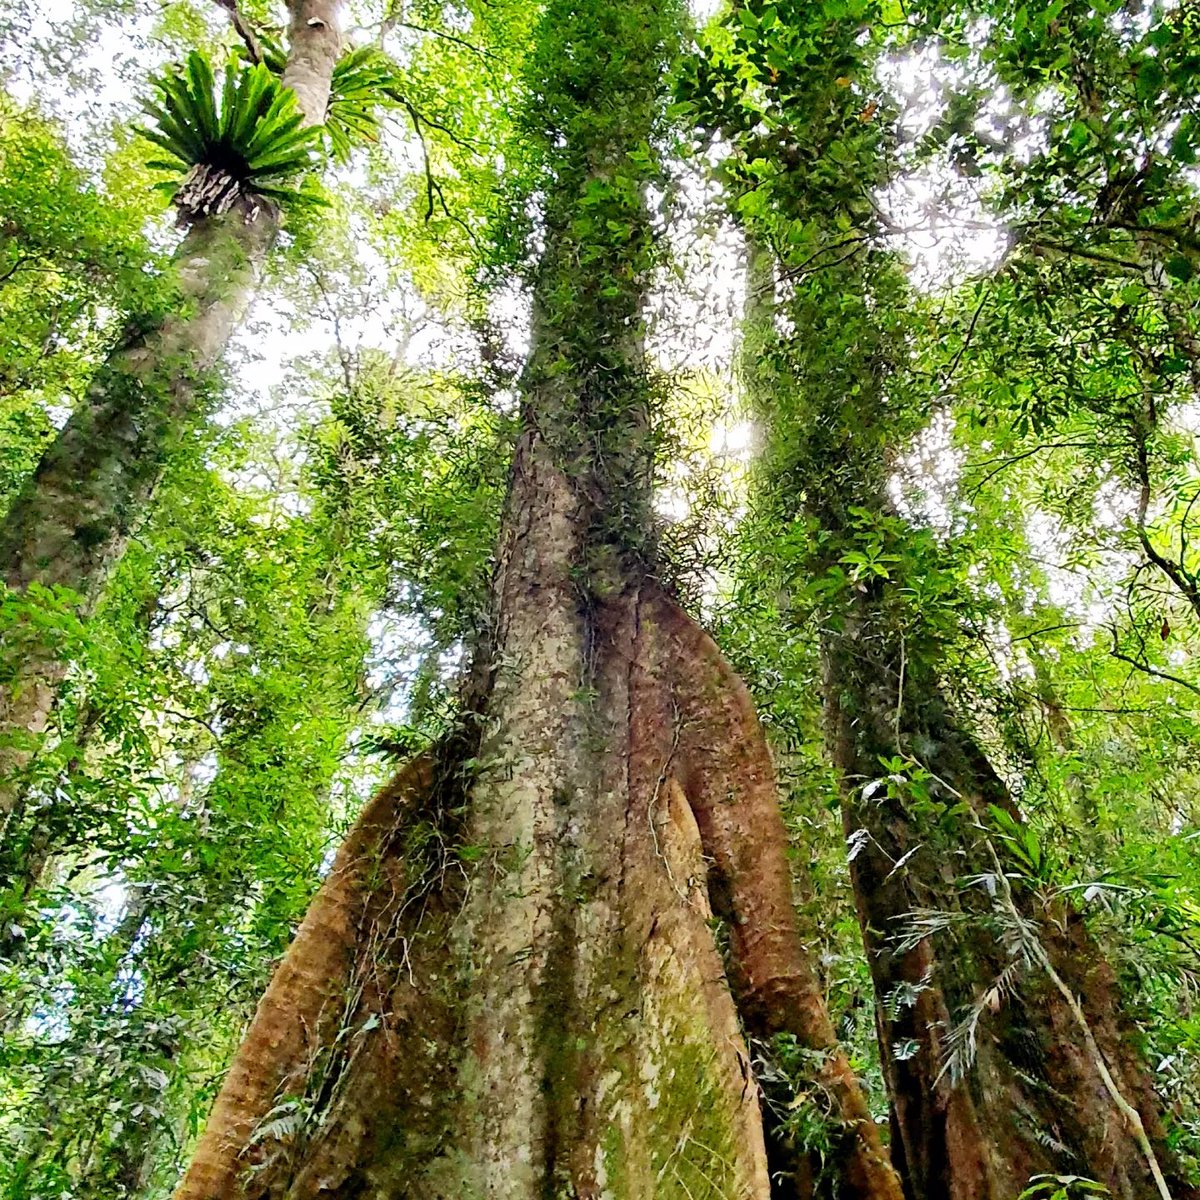 Gondwana rainforest giants, tree ferns and vines on the Lyrebird Walking Track in Dorrigo National Park.
#nationalparks #lyrebirds #dorrigo #walkingtrails #greenlife #treeferns #ancient #rainforest